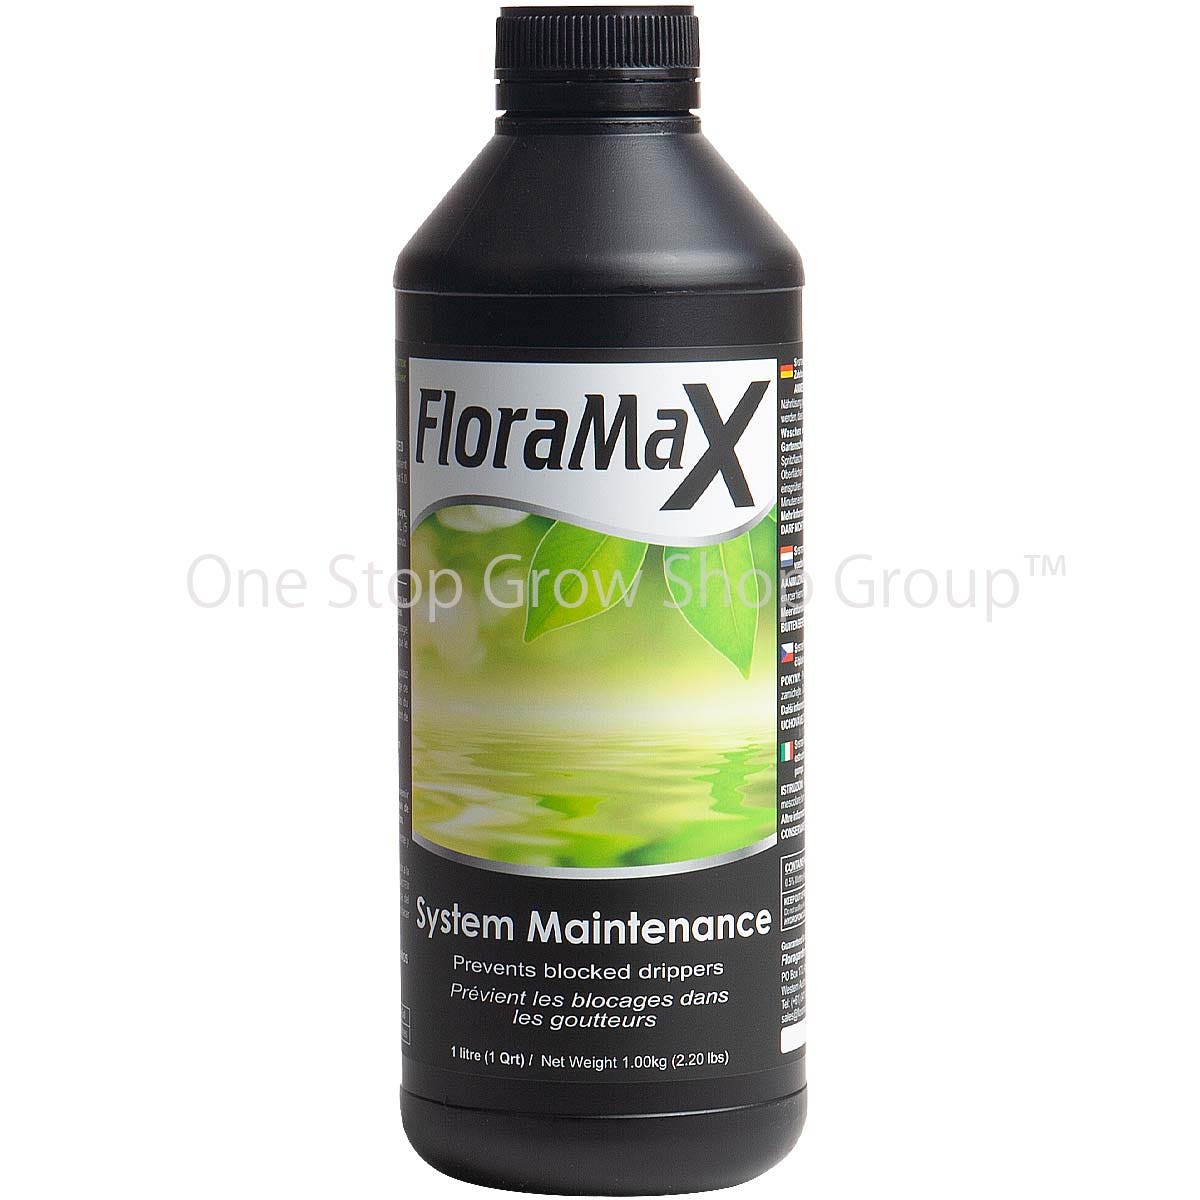 FloraMax System Maintenance